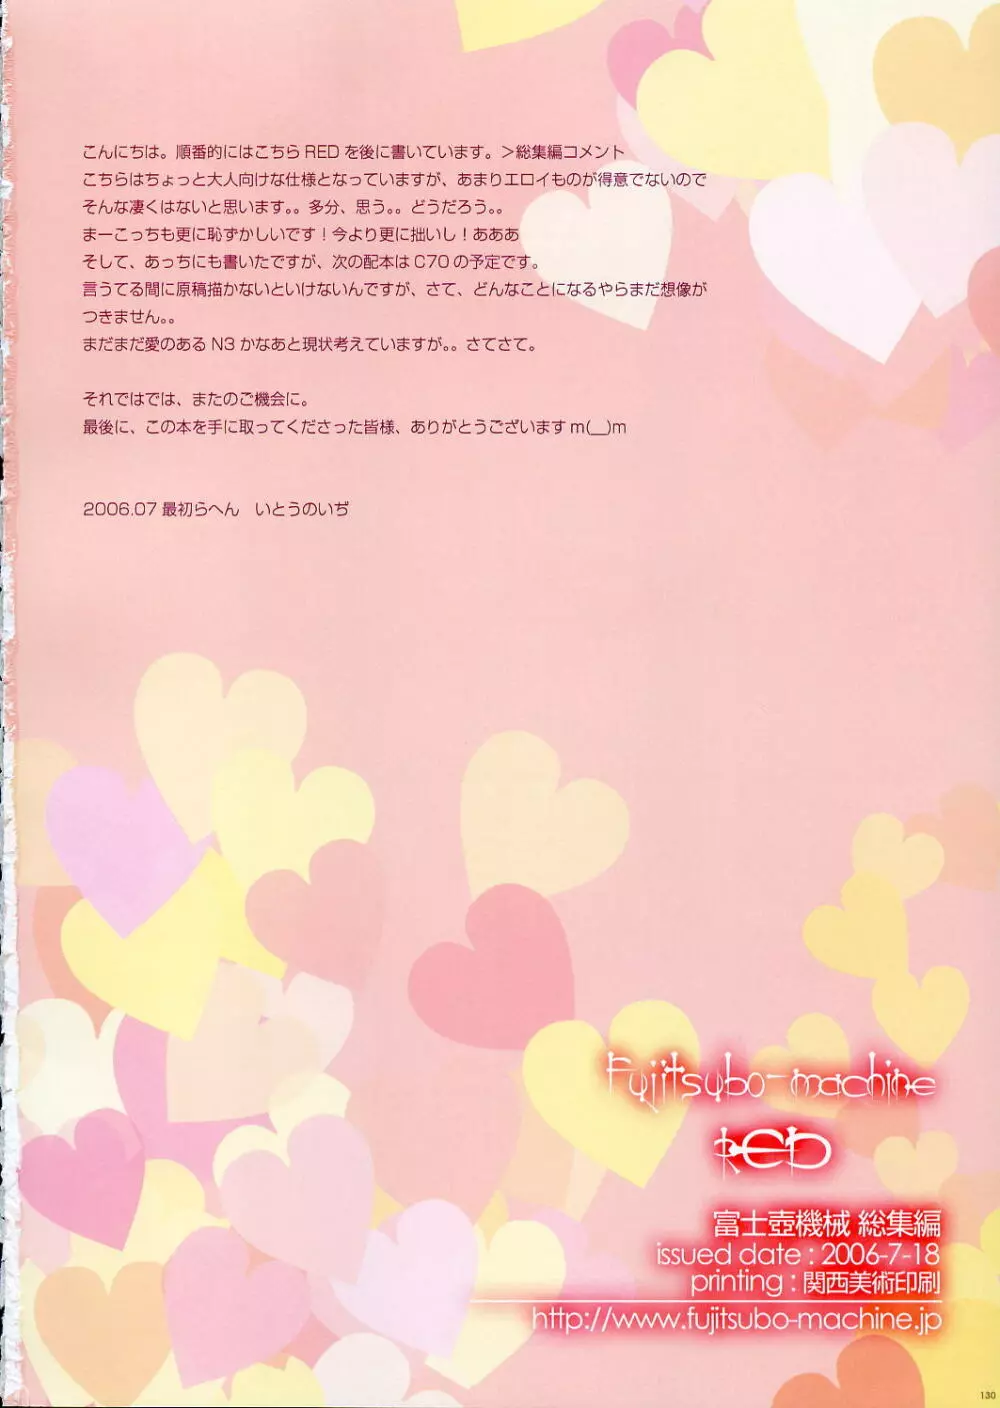 Fujitsubo-machine RED 129ページ